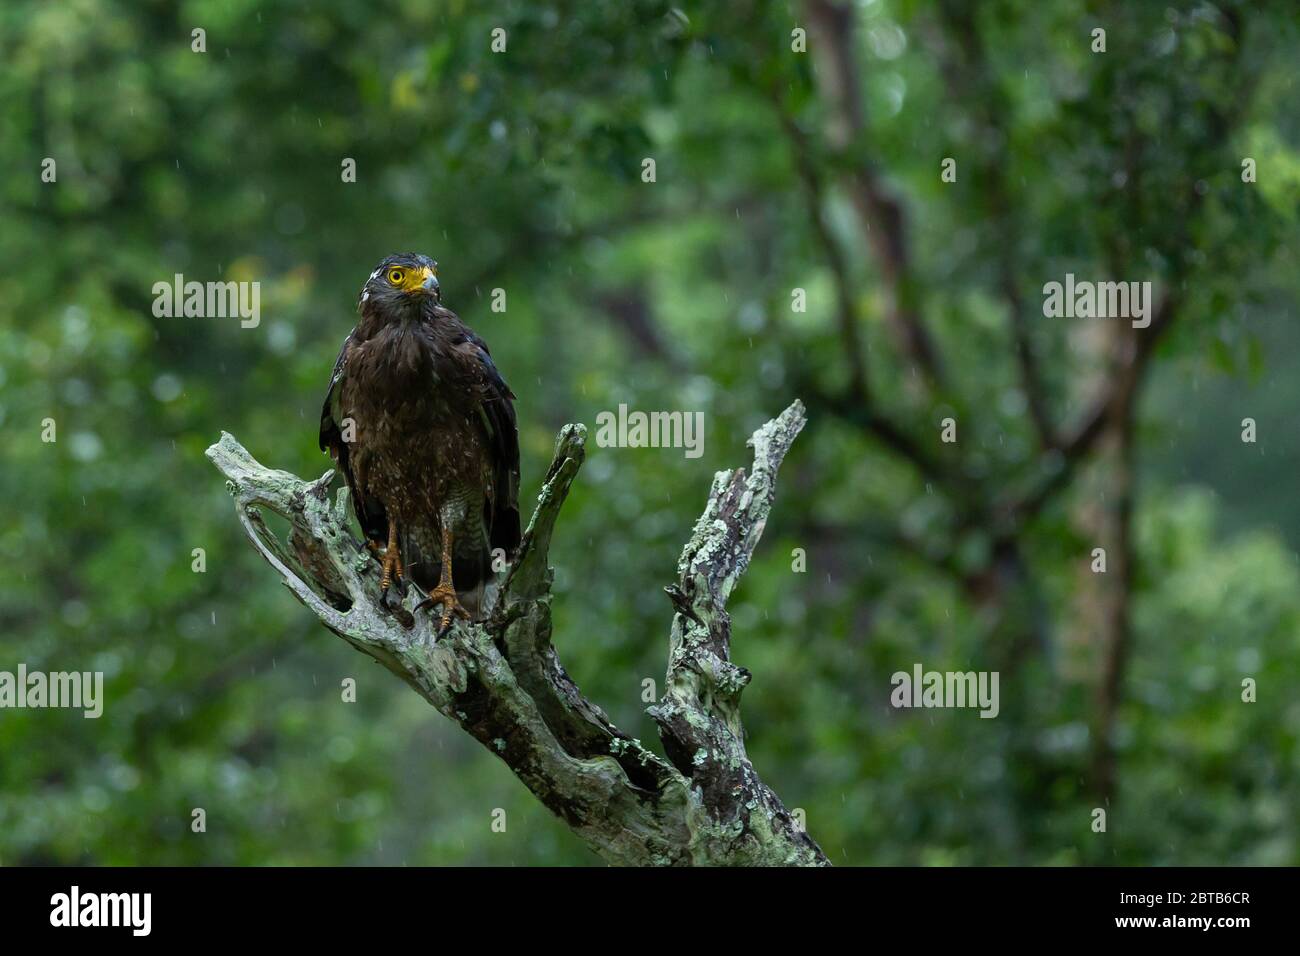 Crested Hawk Eagle Stockfotografie Alamy